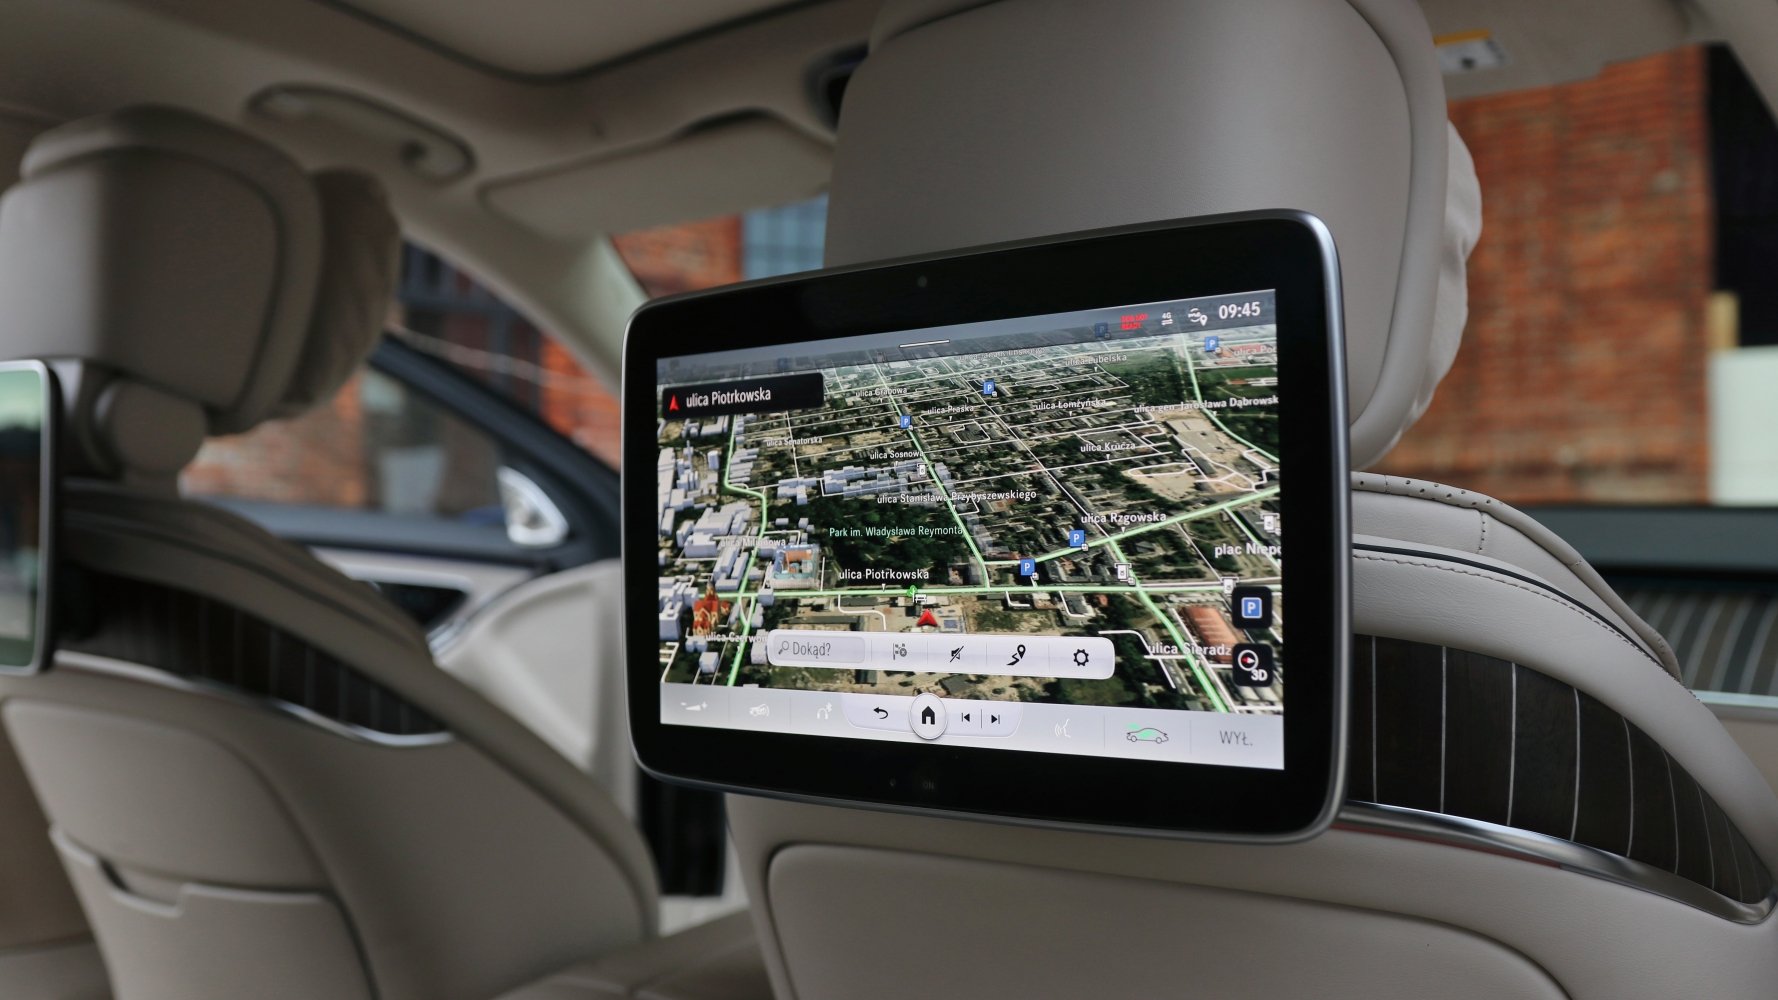 Mercedes klasy S tablety samochód nawigacja